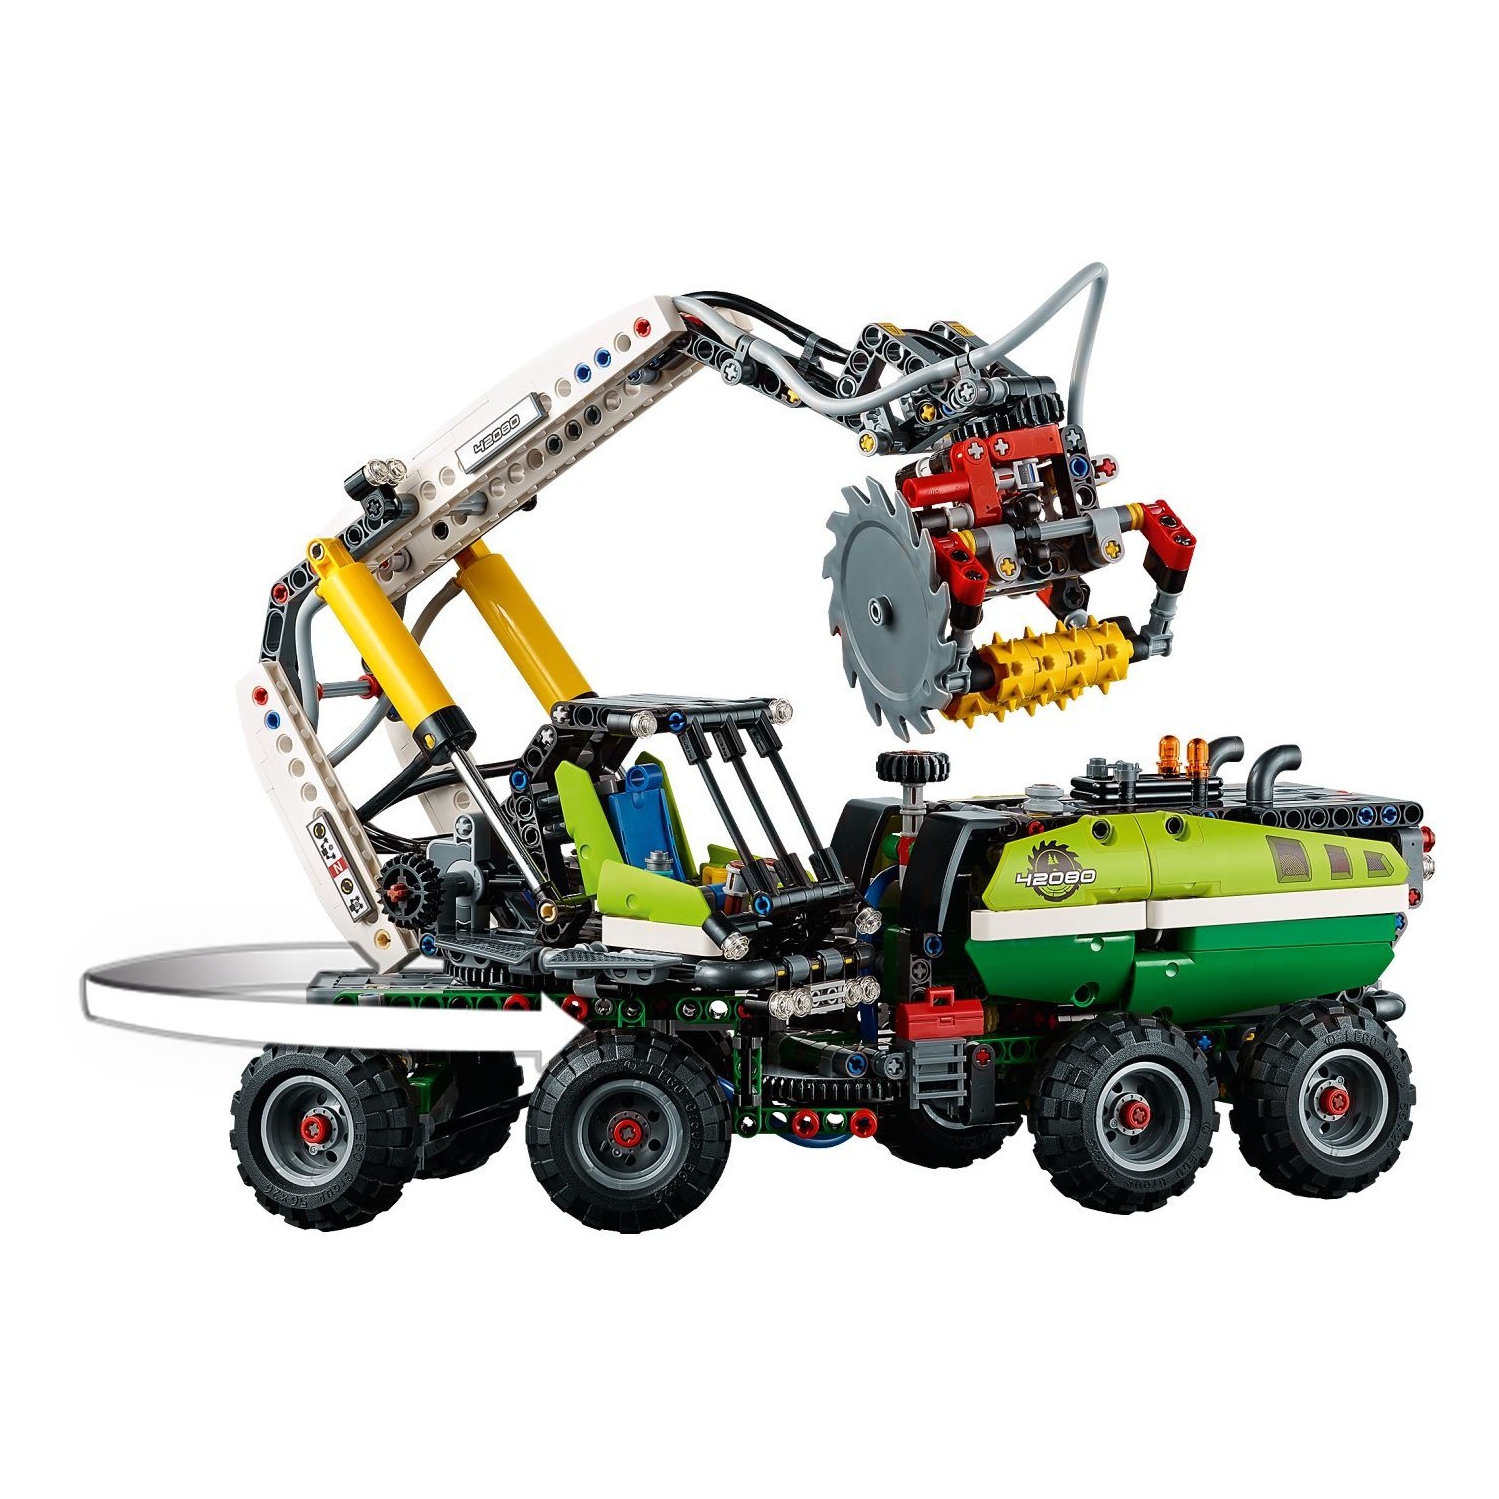 LEGO Technic: Forest Machine - 1003 Pieces (42080) | Best Buy